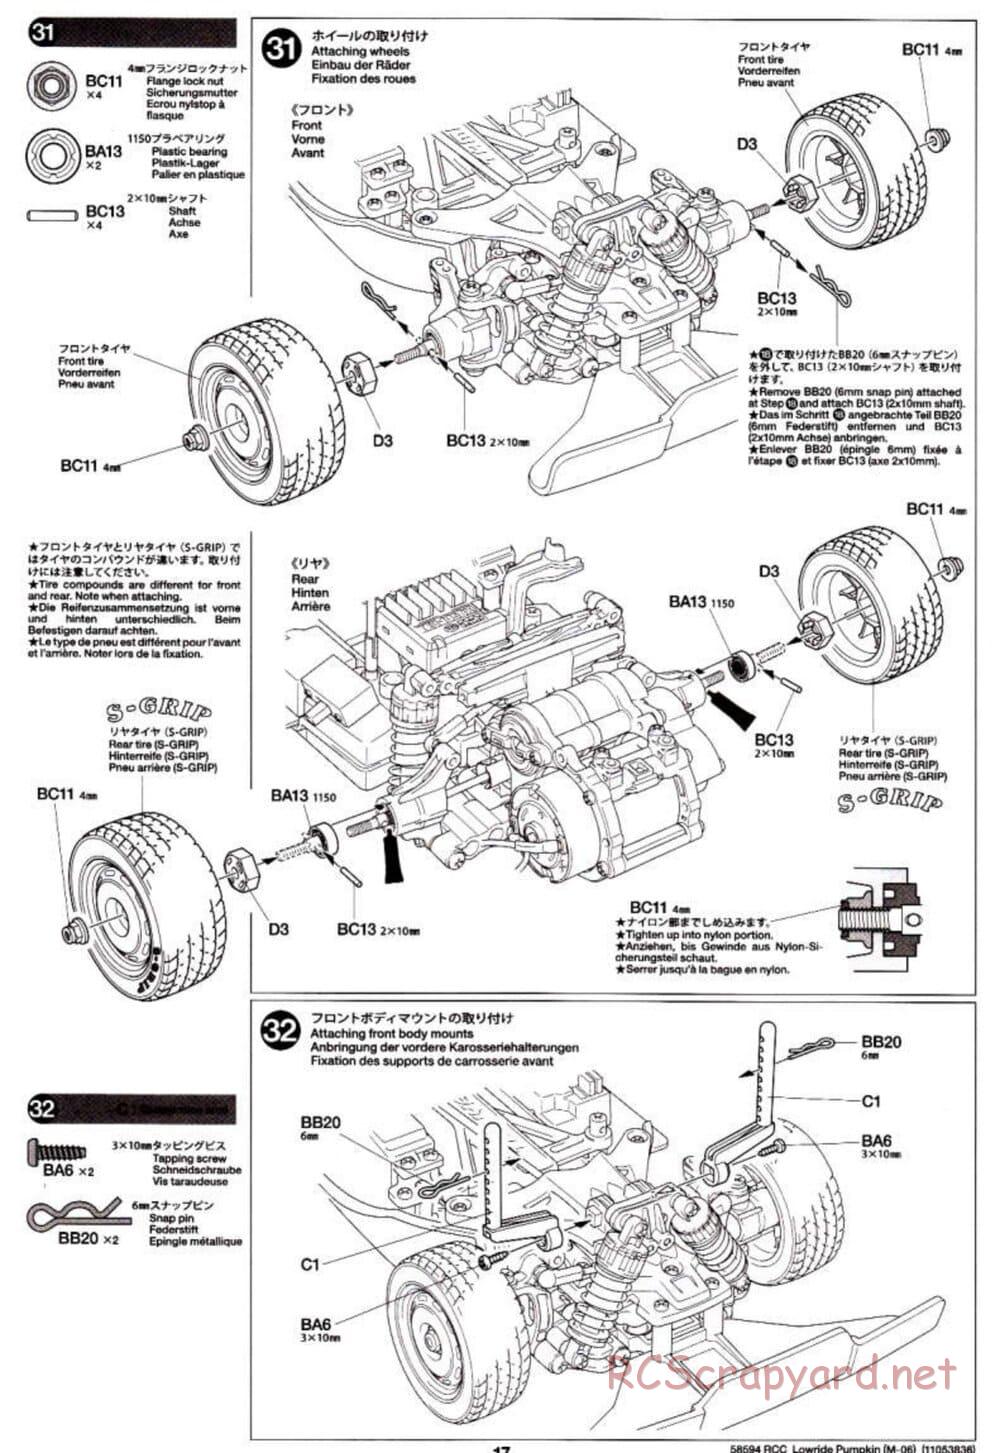 Tamiya - Lowride Pumpkin - M-06 Chassis - Manual - Page 17